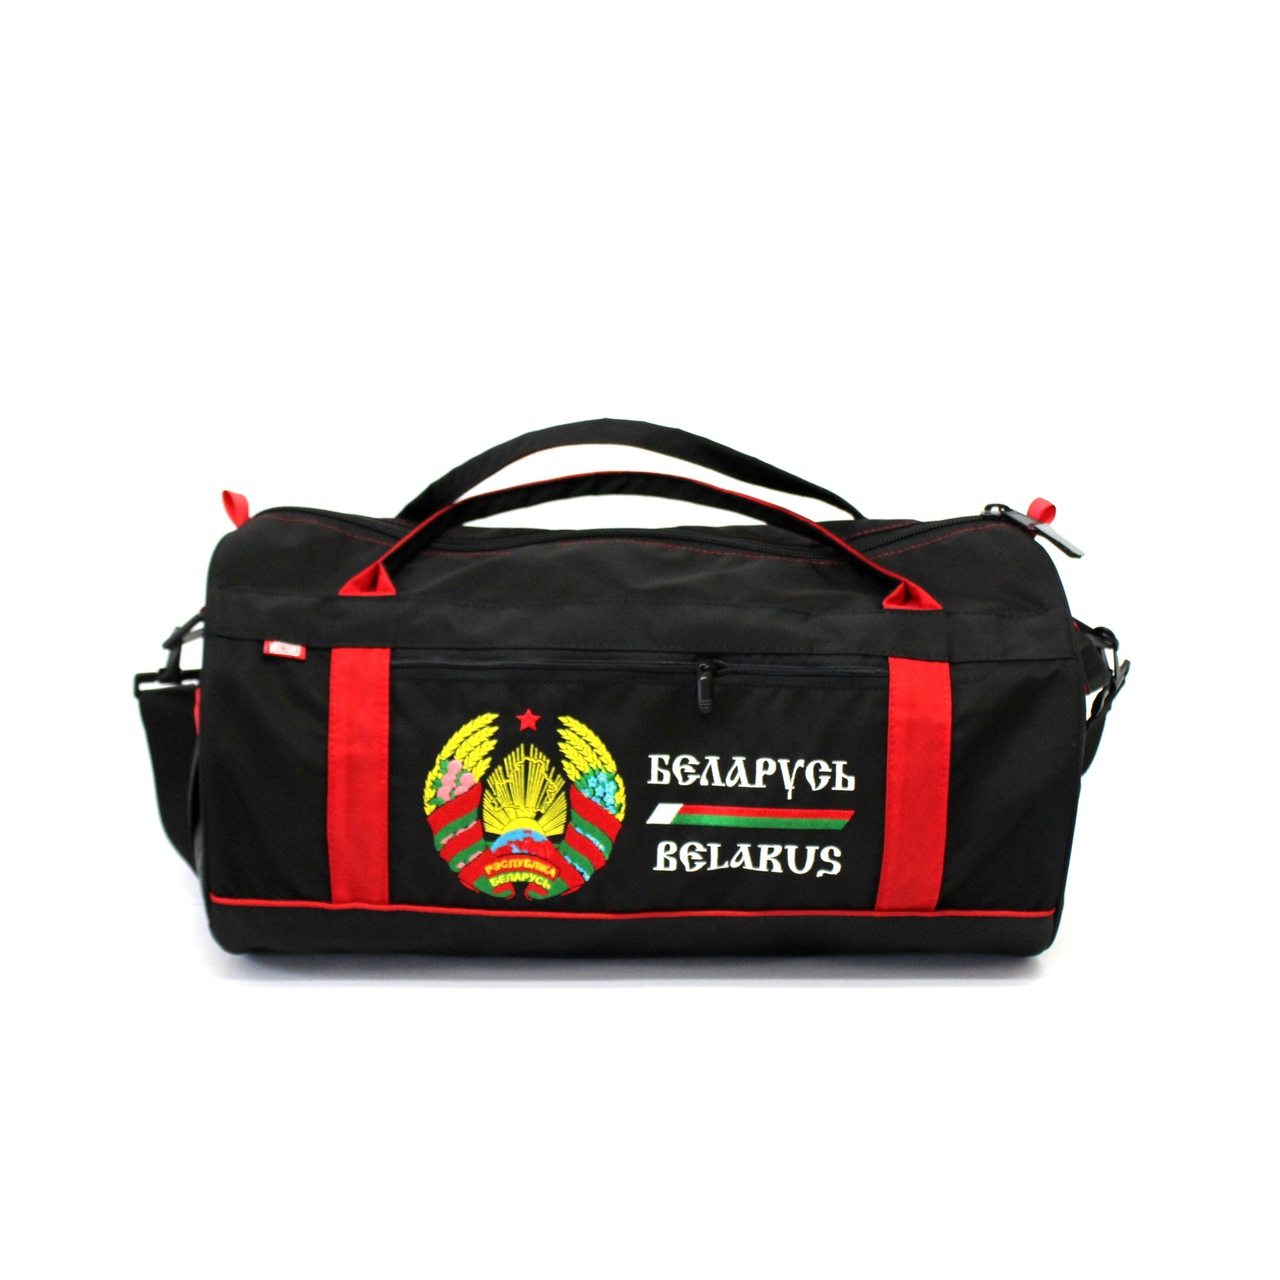 Спортивная сумка Спорт Сибирь Беларусь 30 литров черная